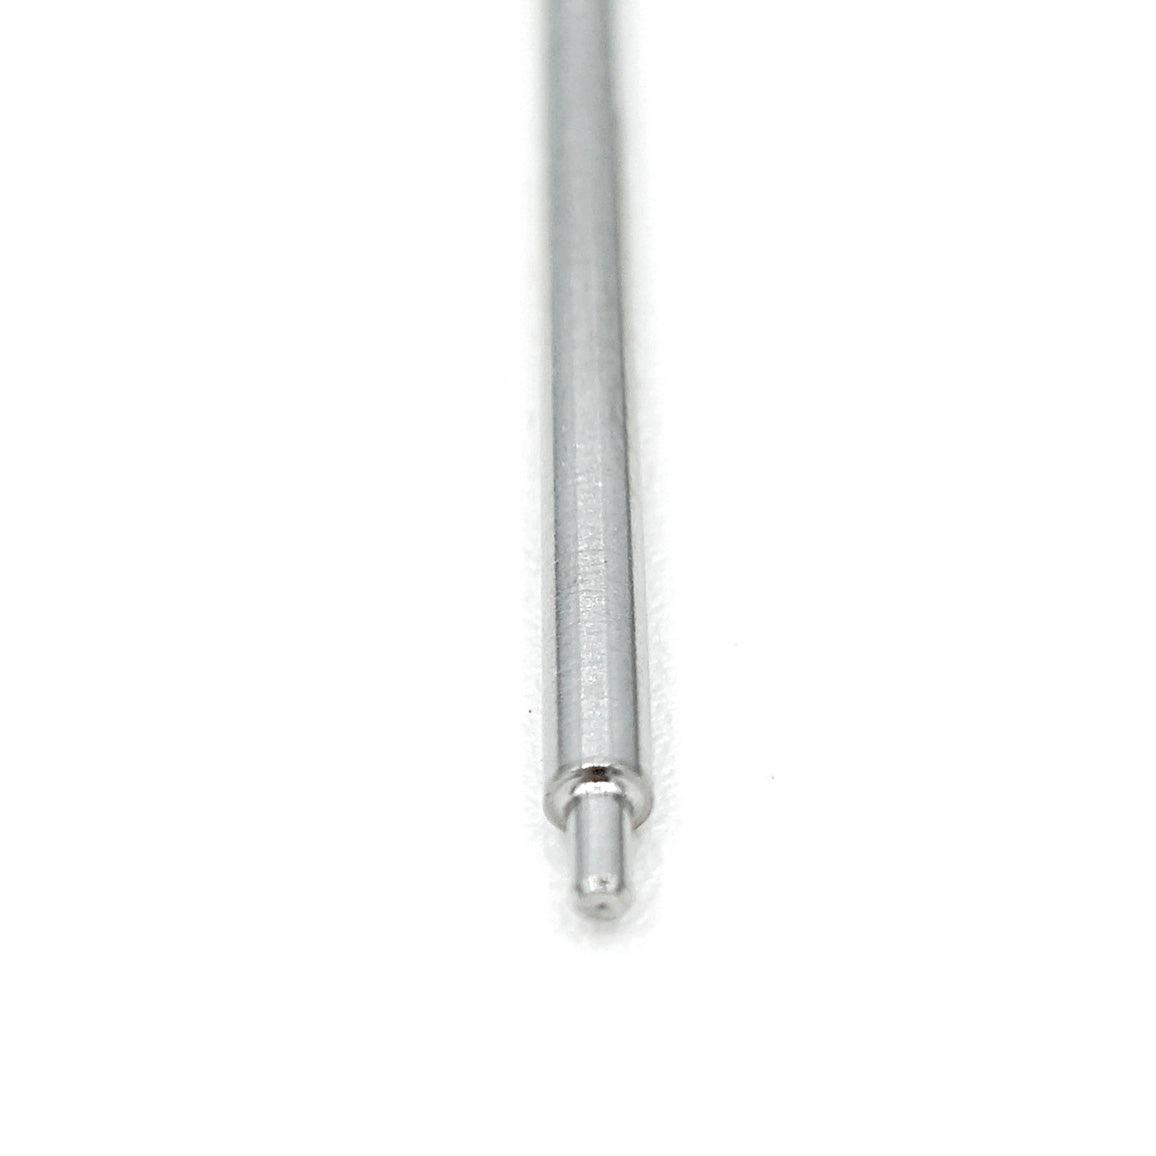 Stiletto Piercing Needles - 16G - Piercing Needles - Mithra Tattoo Supplies Canada